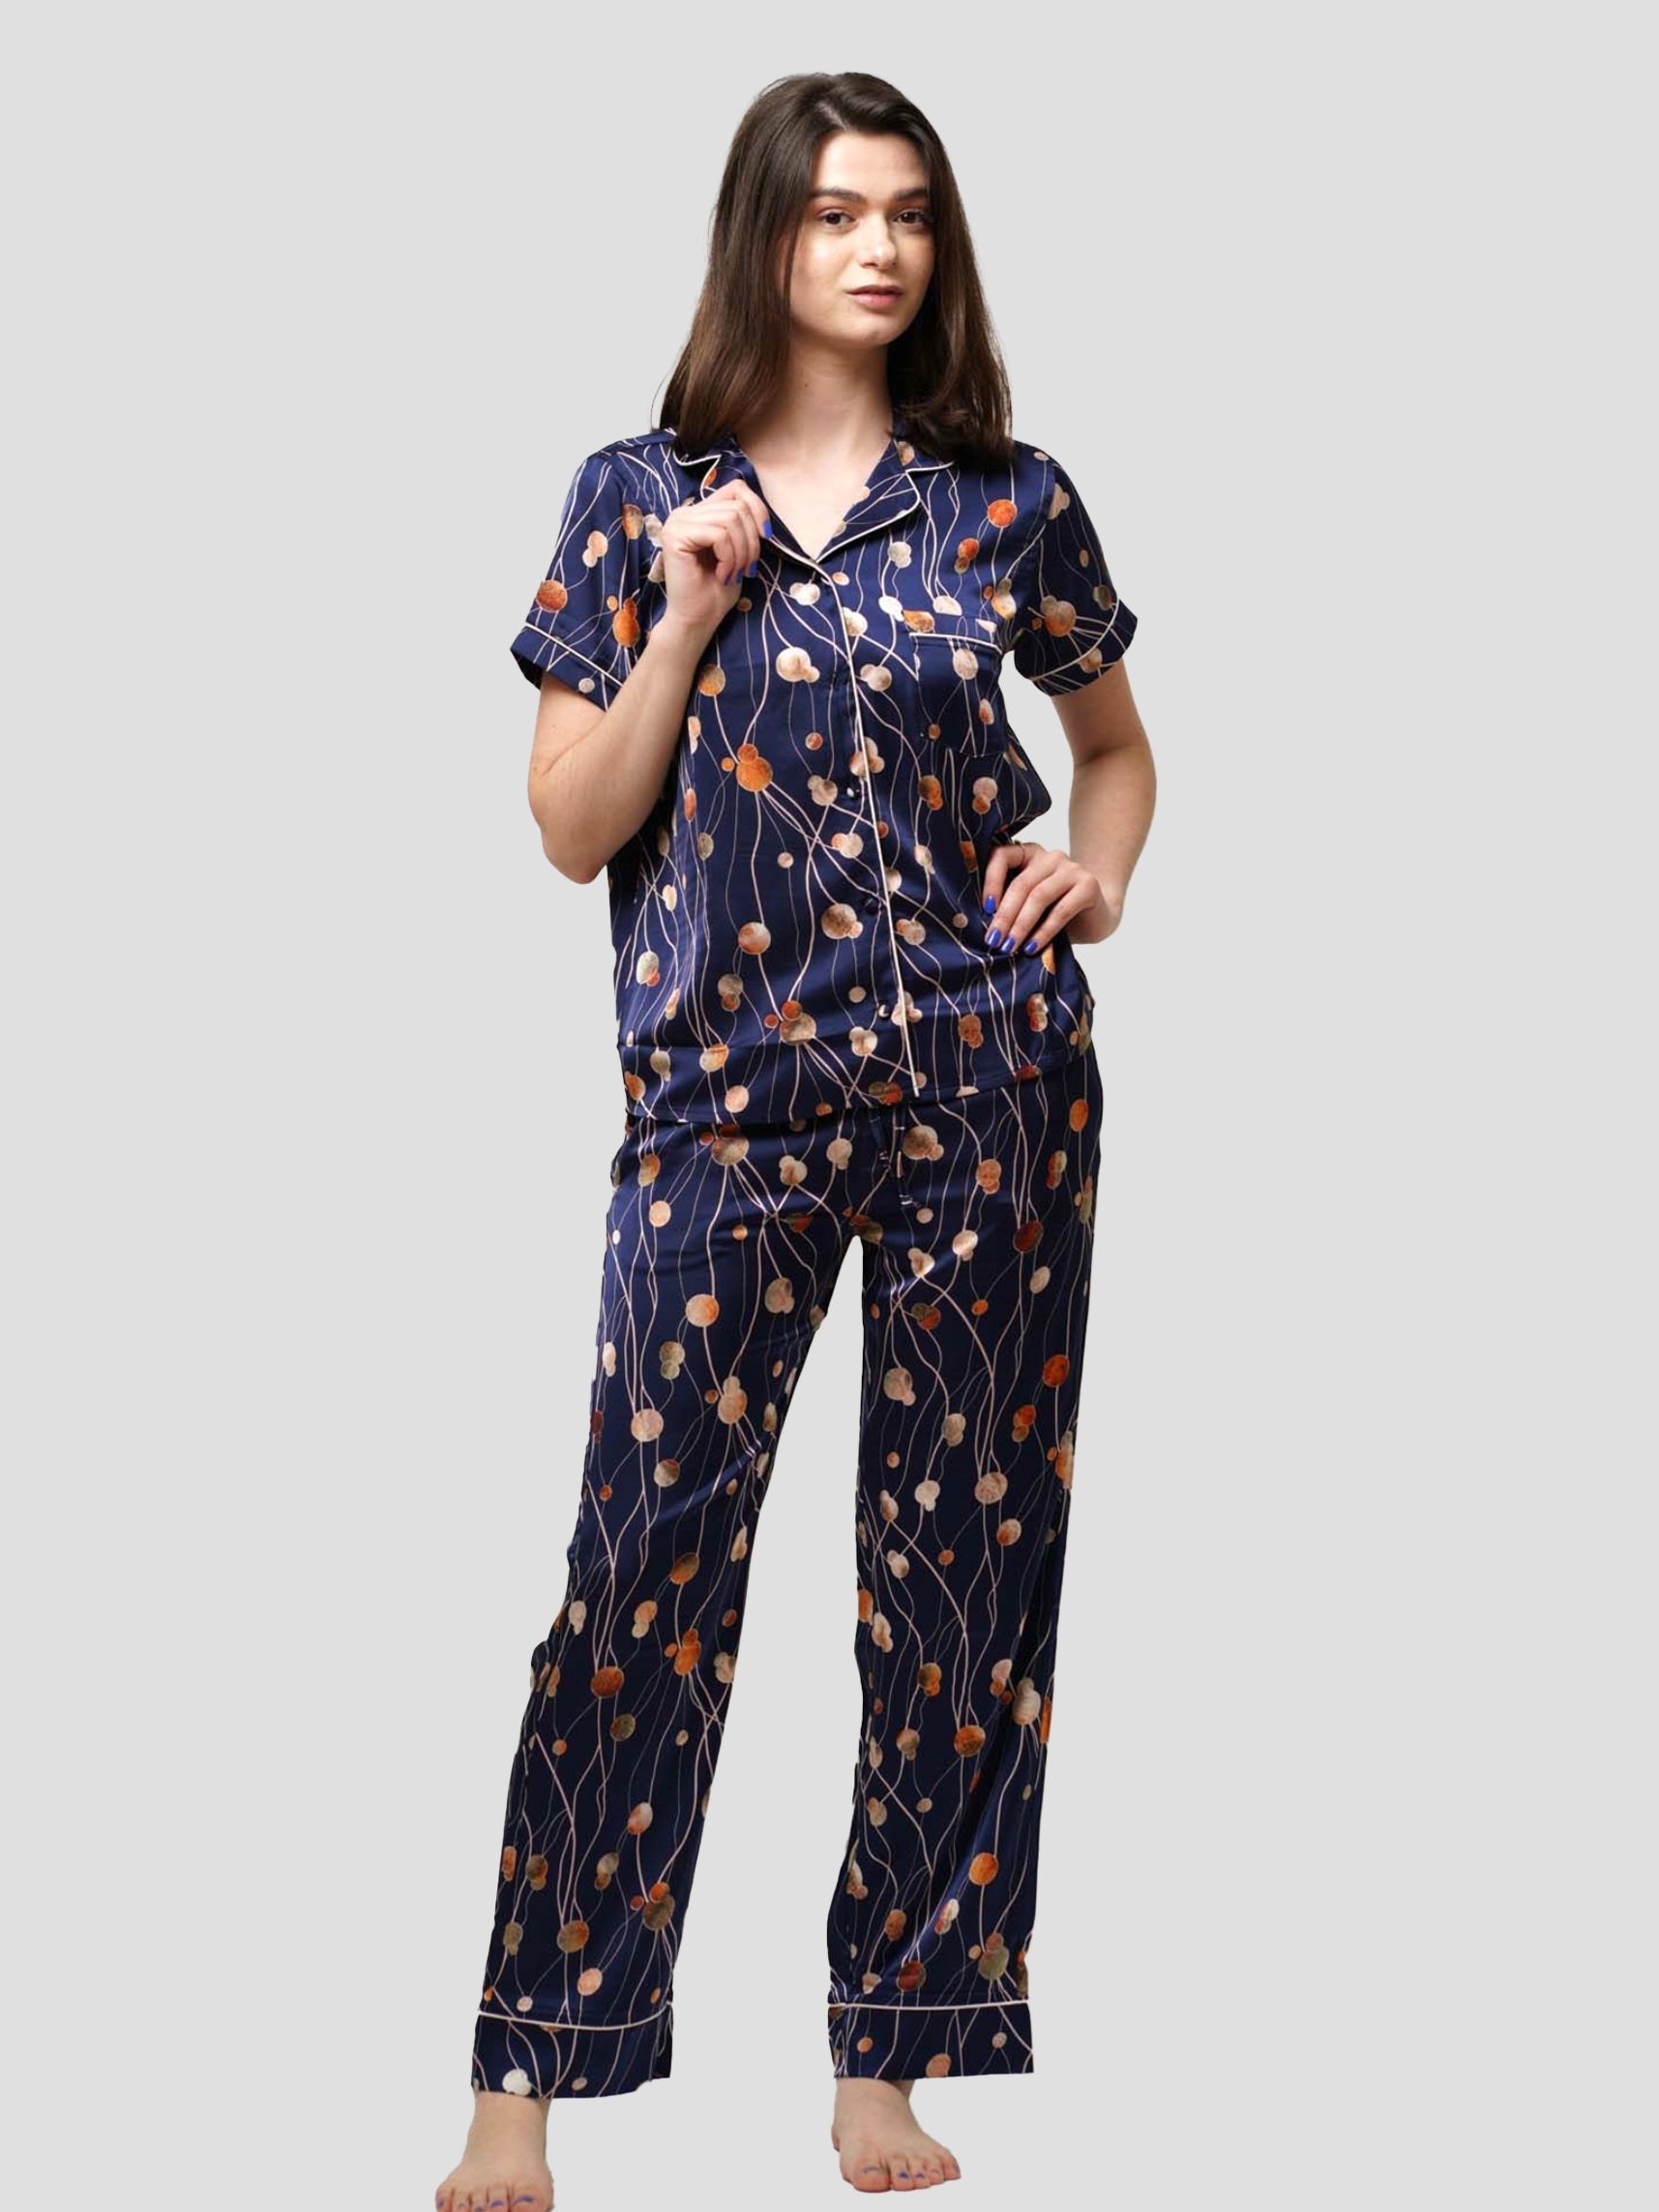 Navy abstract printed Notch collar sleepwear set in Satin fabric - inteblu